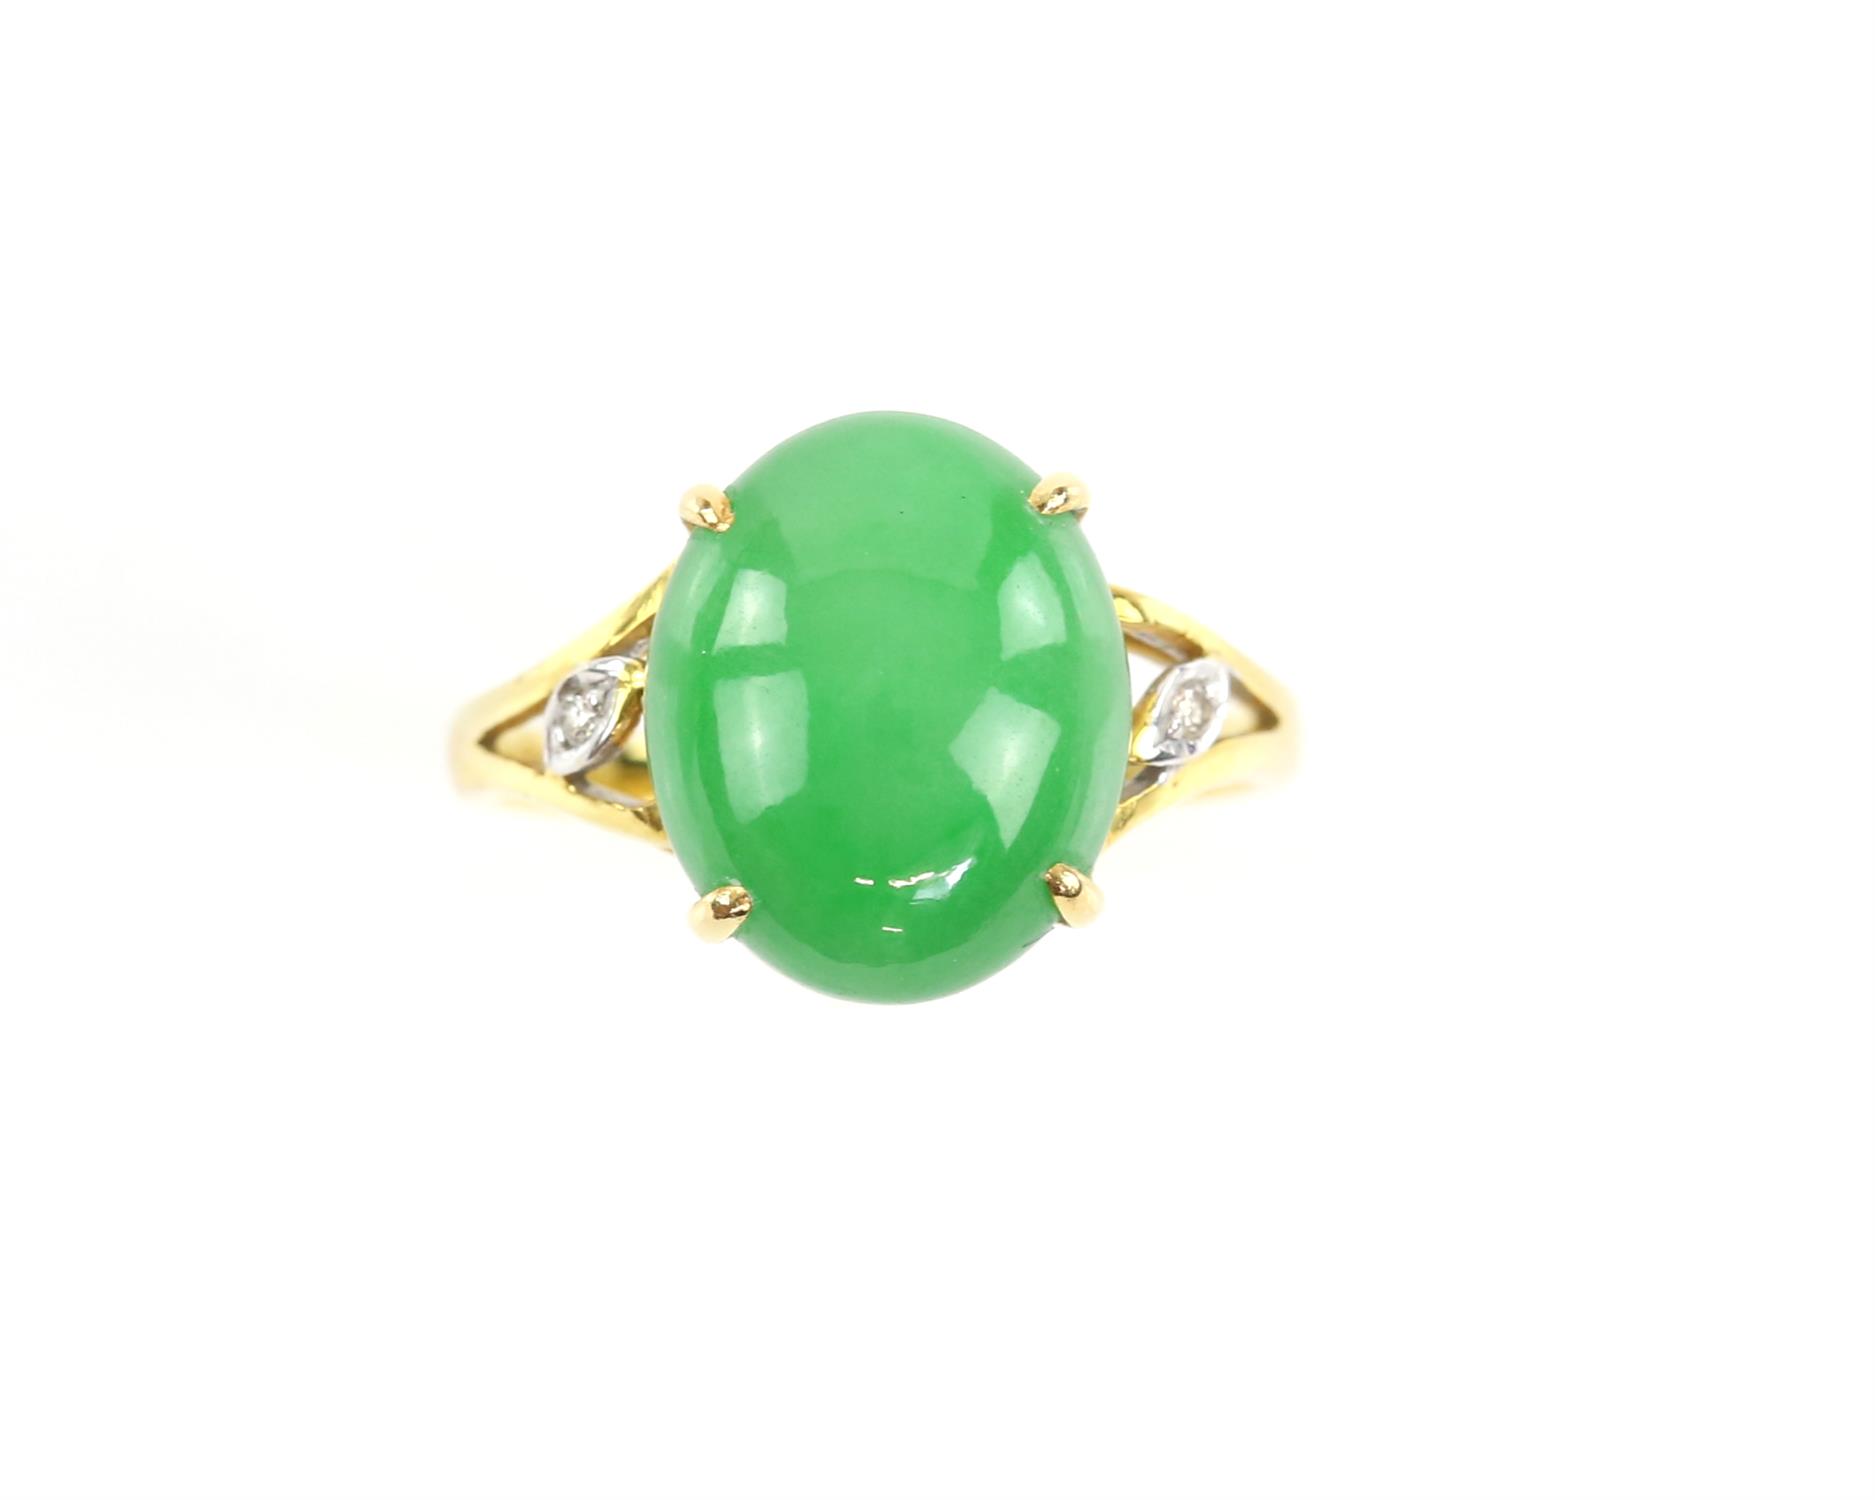 Jade and diamond ring, oval cabochon cut jade 13 x 10 mm, with round brilliant cut diamond set